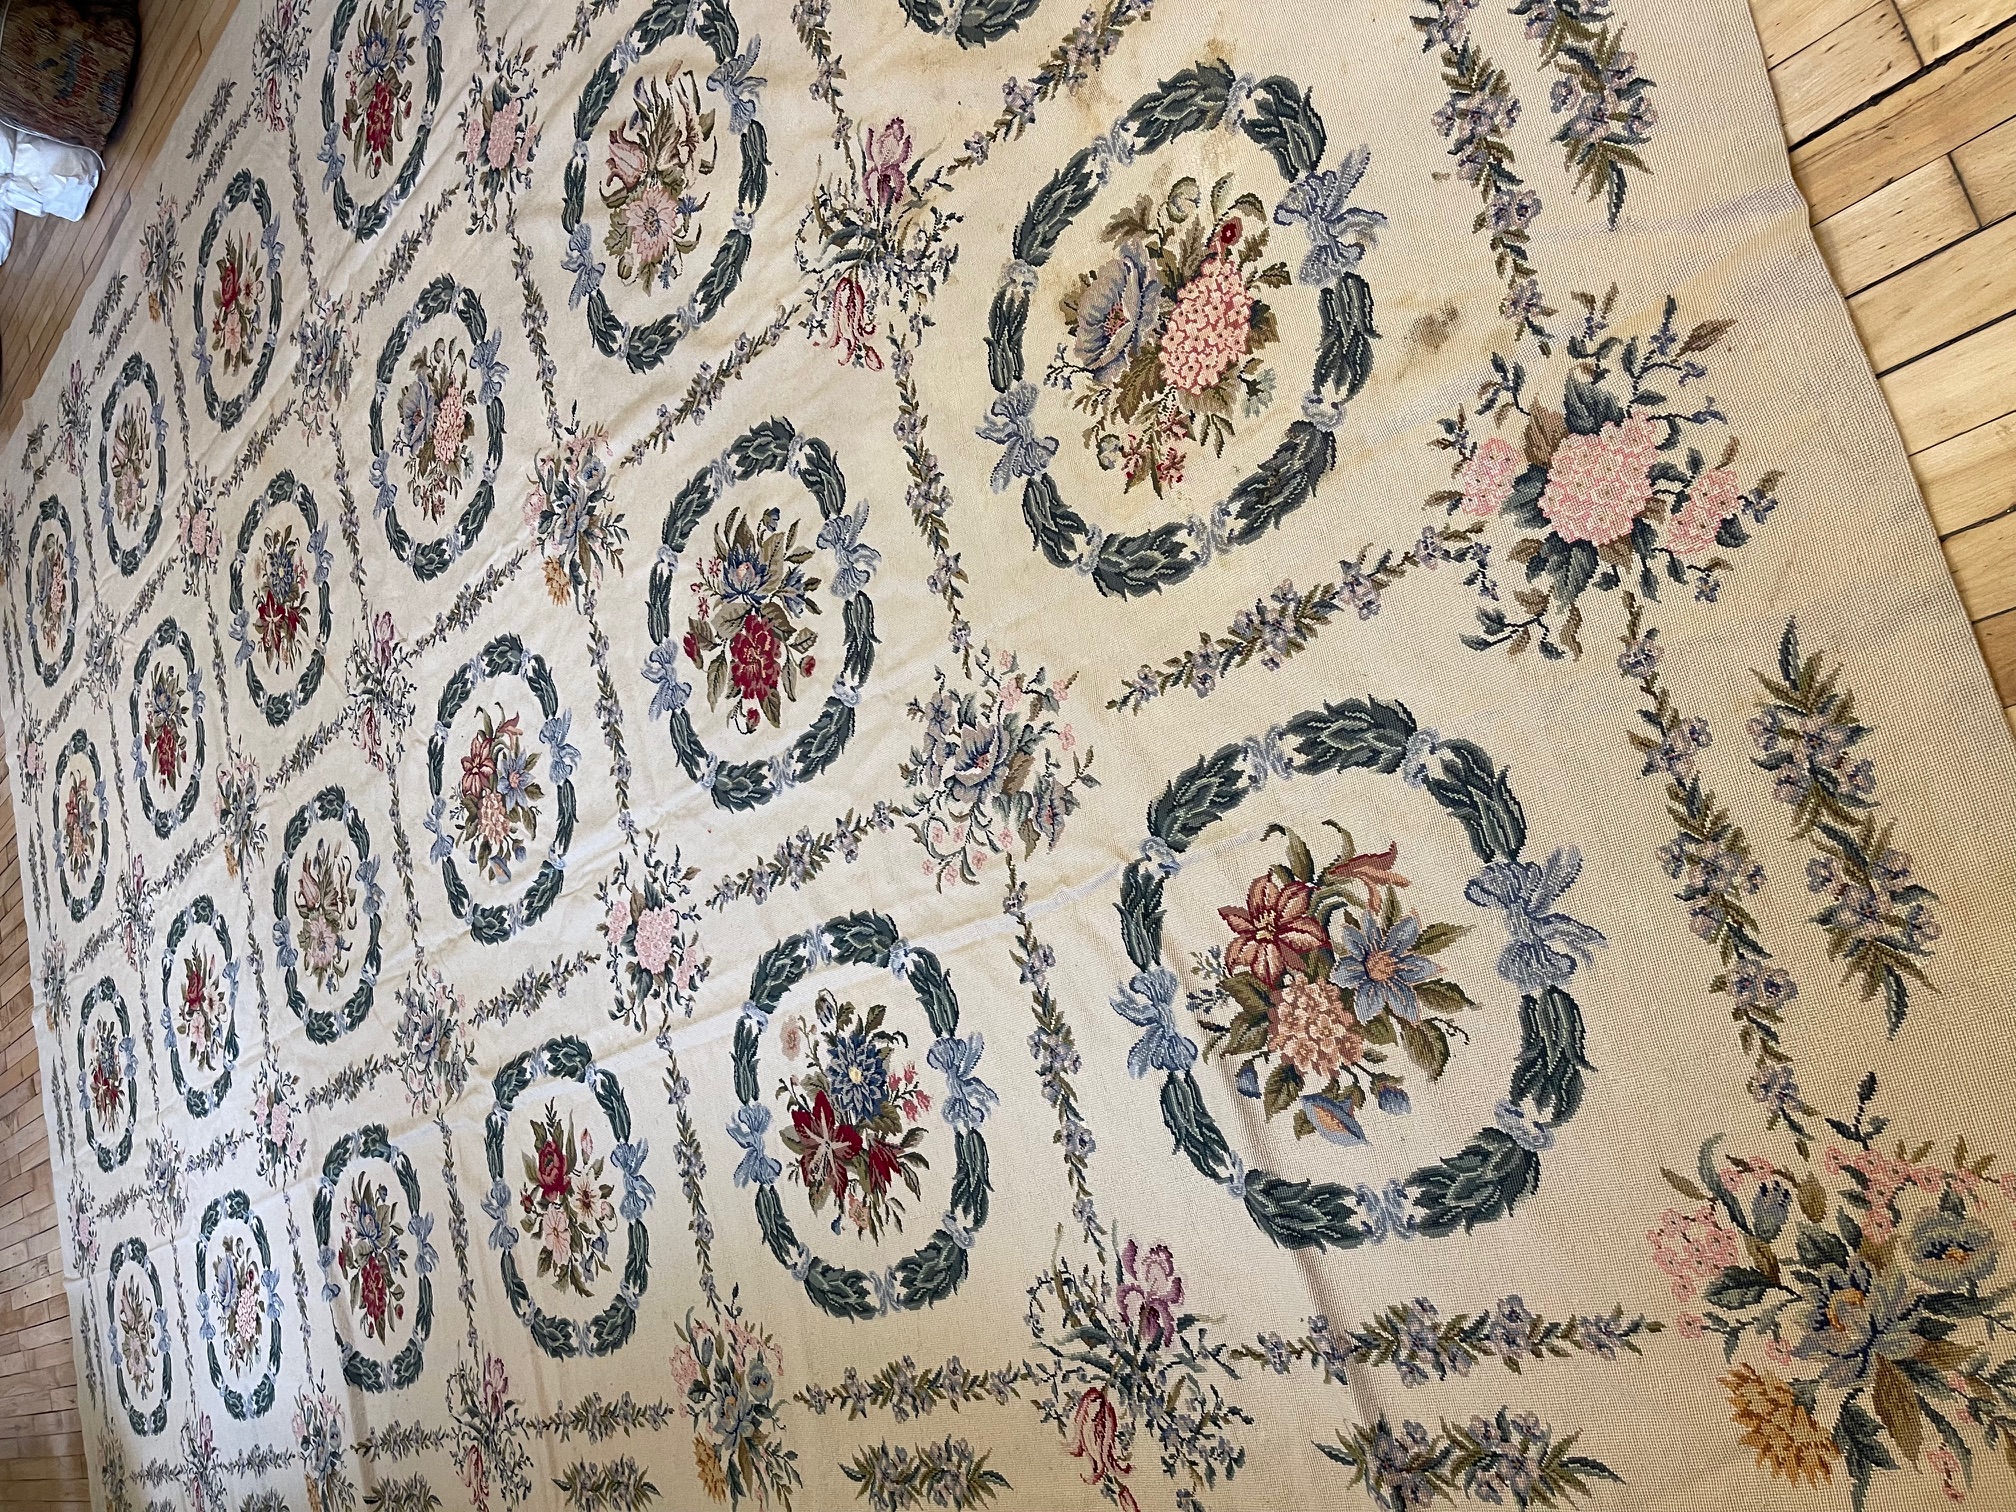 Antique needlepoint Carpet - # 57563